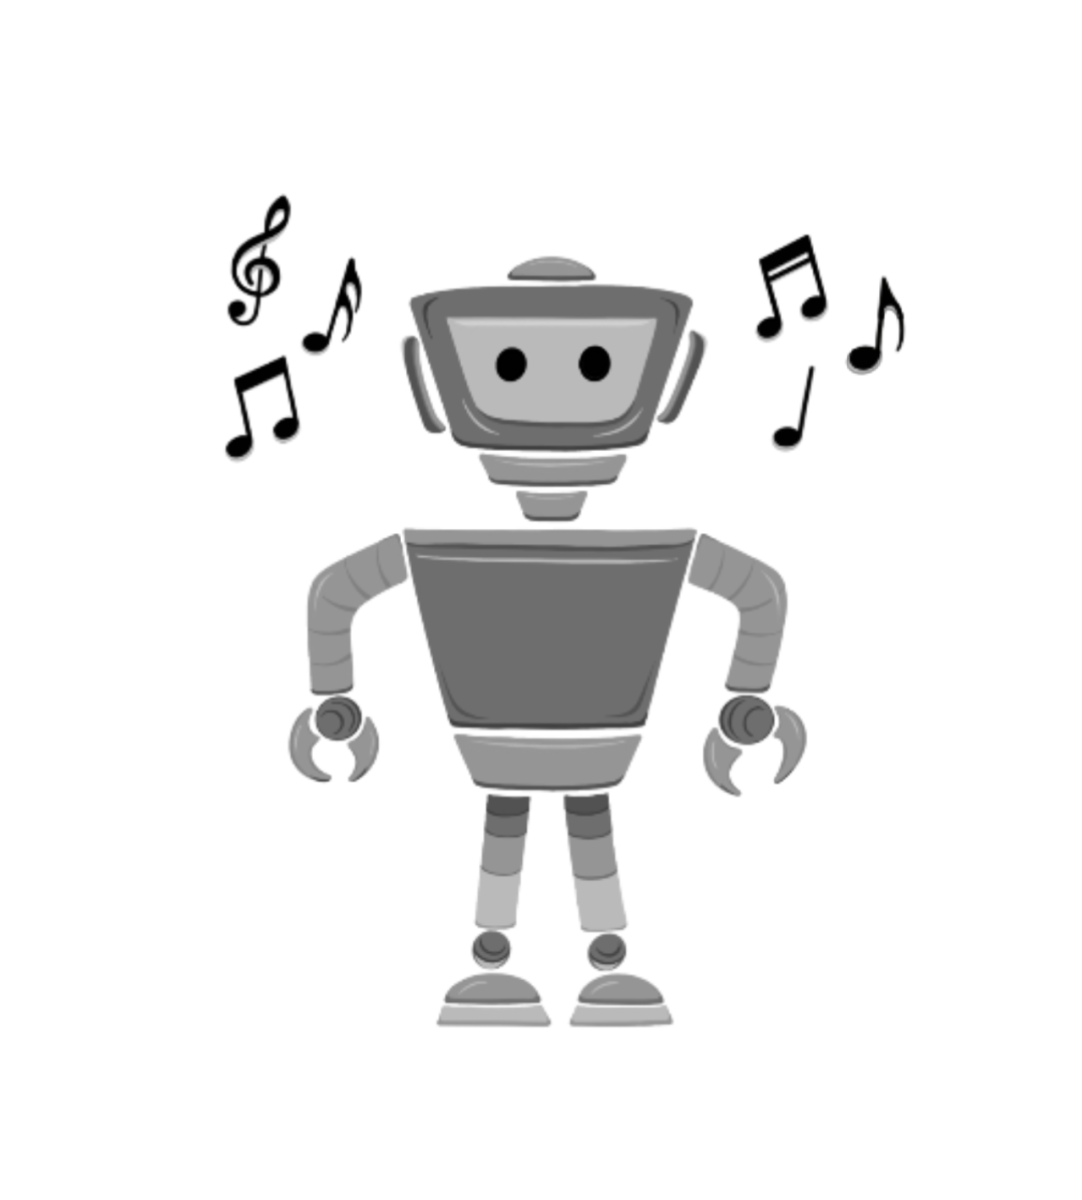 The future with AI music